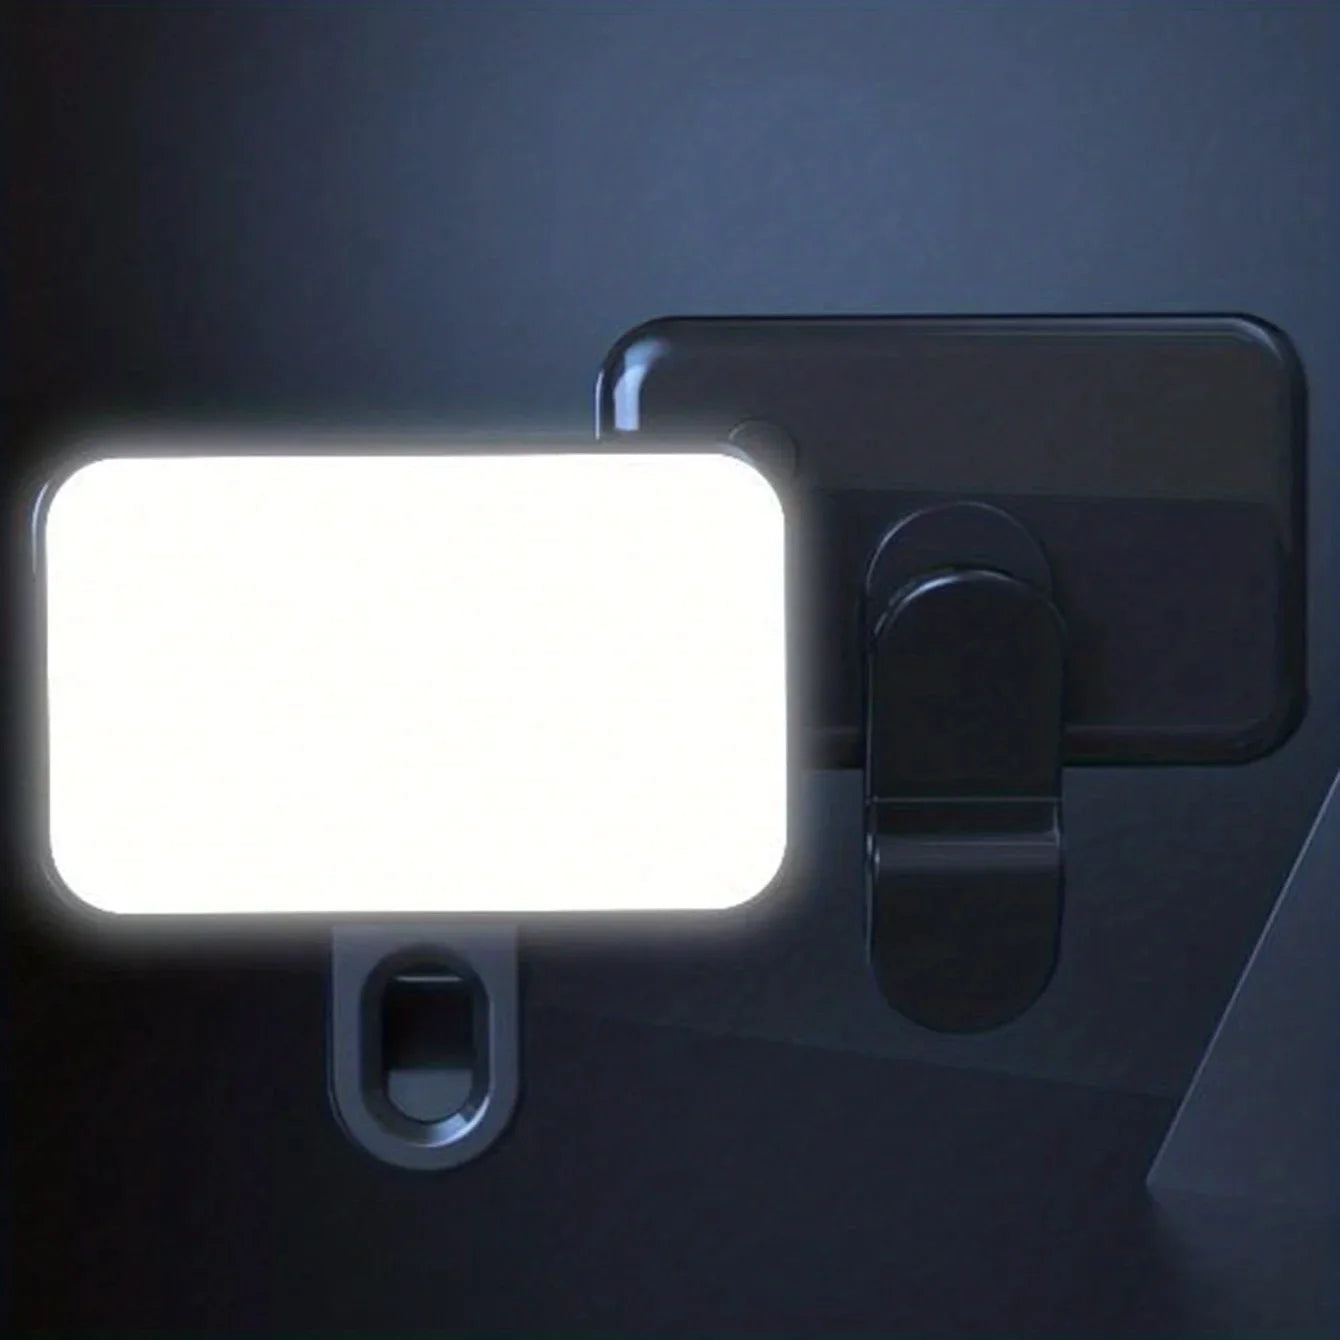 HOMY's GlowClip Mini Selfie Light